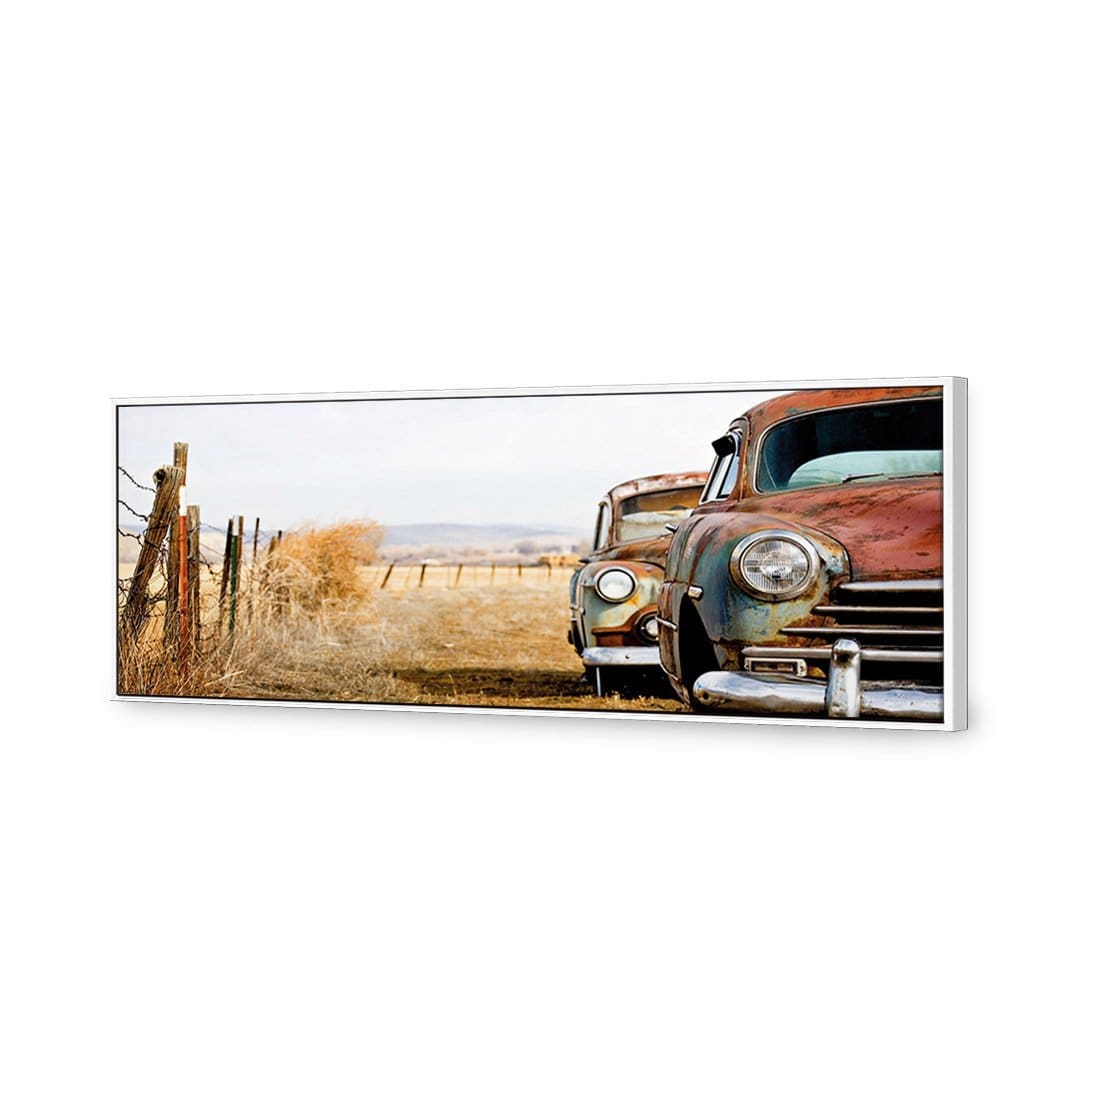 Rusty Cars Canvas Art-Canvas-Wall Art Designs-60x20cm-Canvas - White Frame-Wall Art Designs